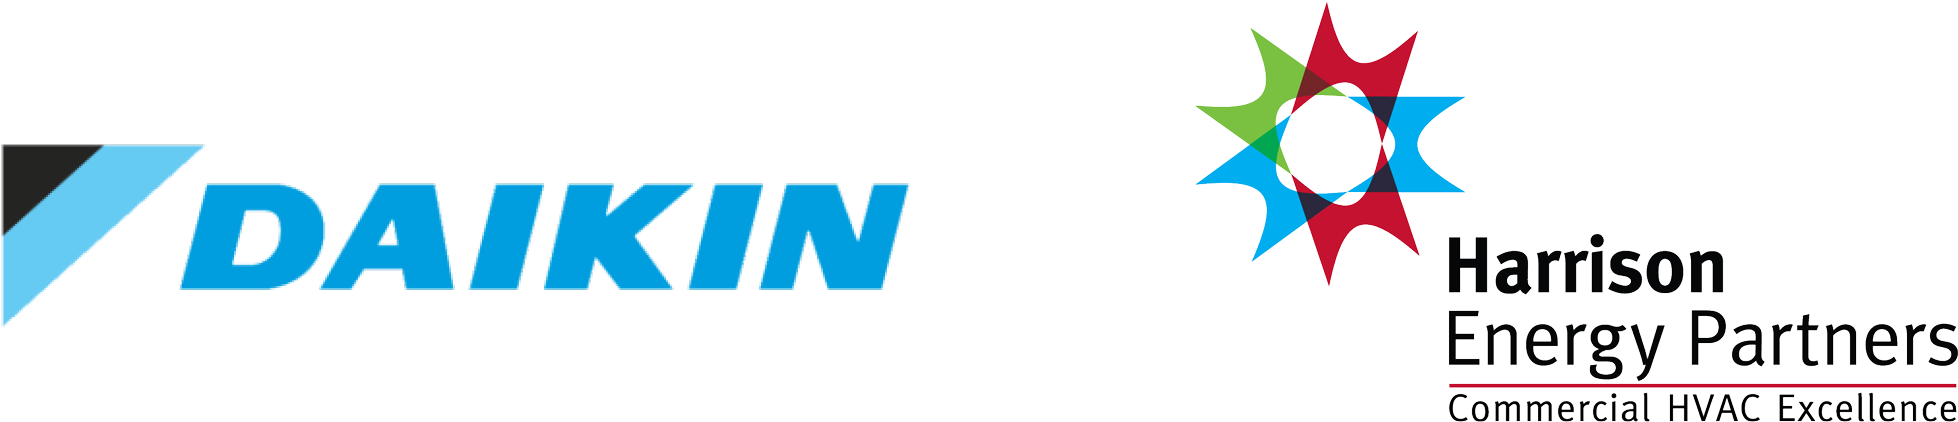 Daikin Logo PNG Transparent Image